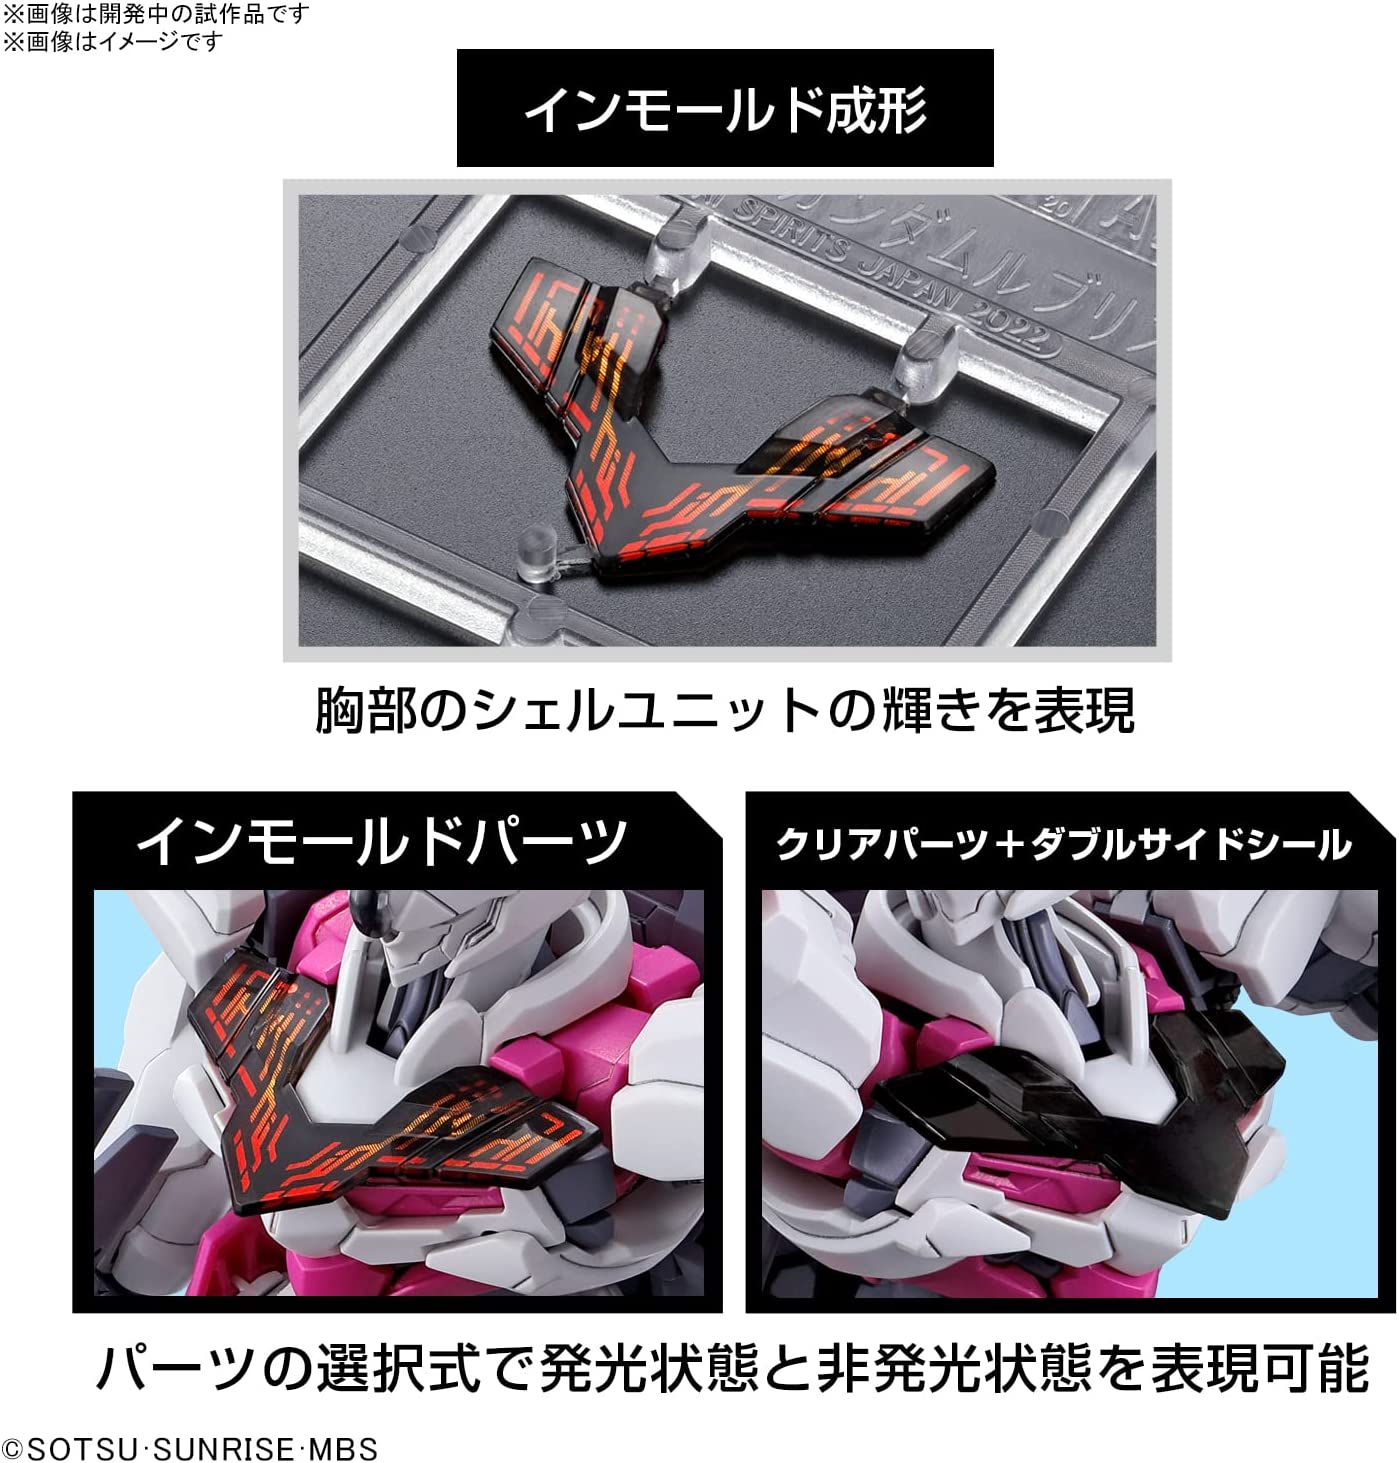 HG 2587102 Mobile Suit Gundam Lublis 1/144 Scale, Color-Coded Pl